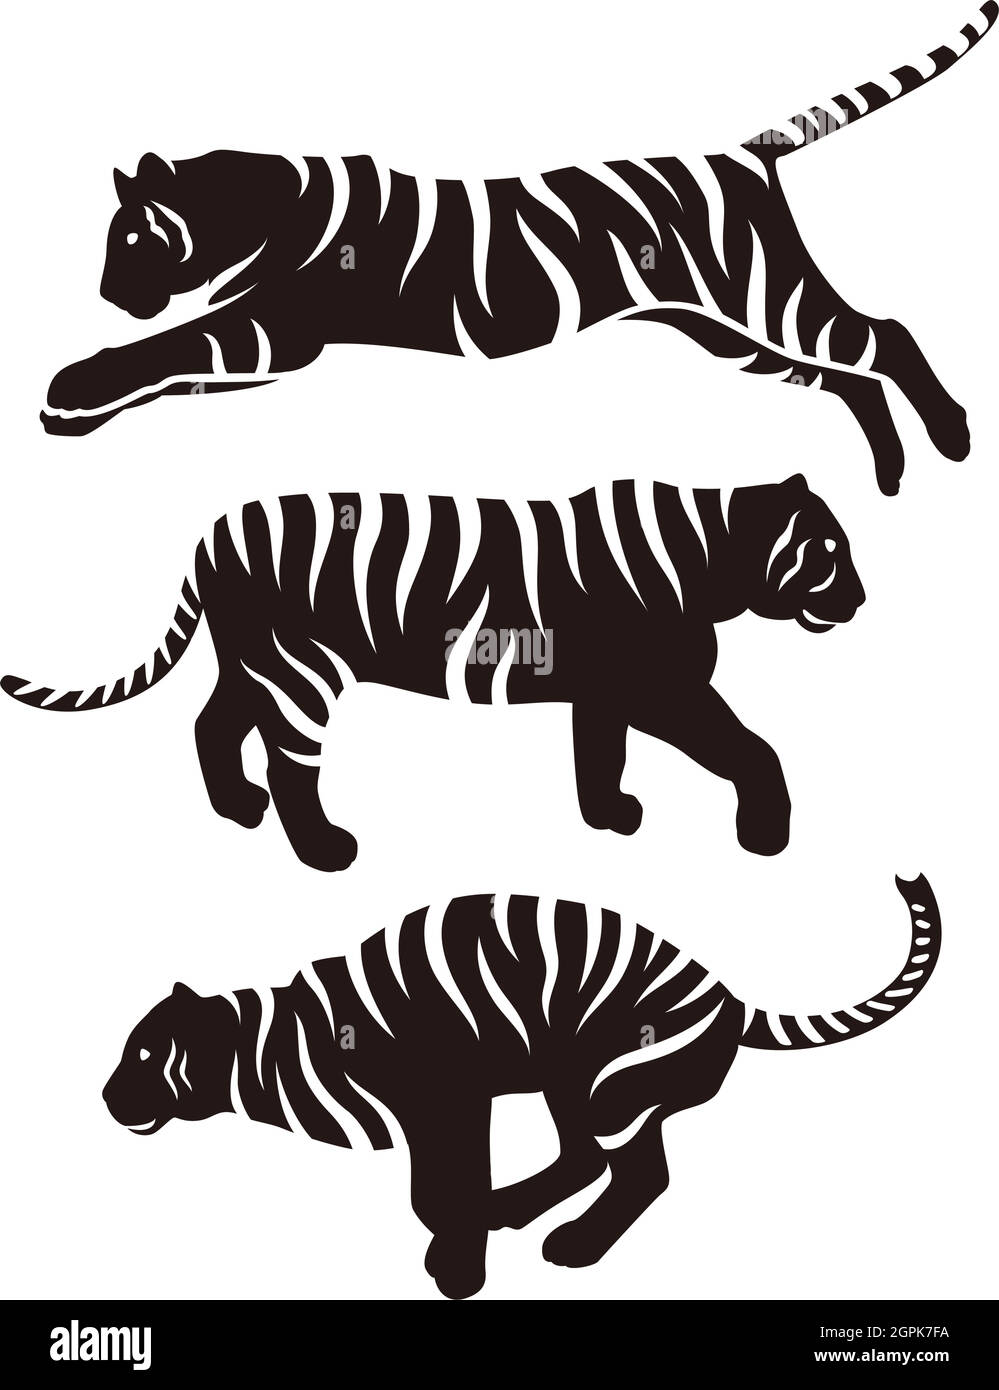 Tiger Silhouette illustration set Stock Vector